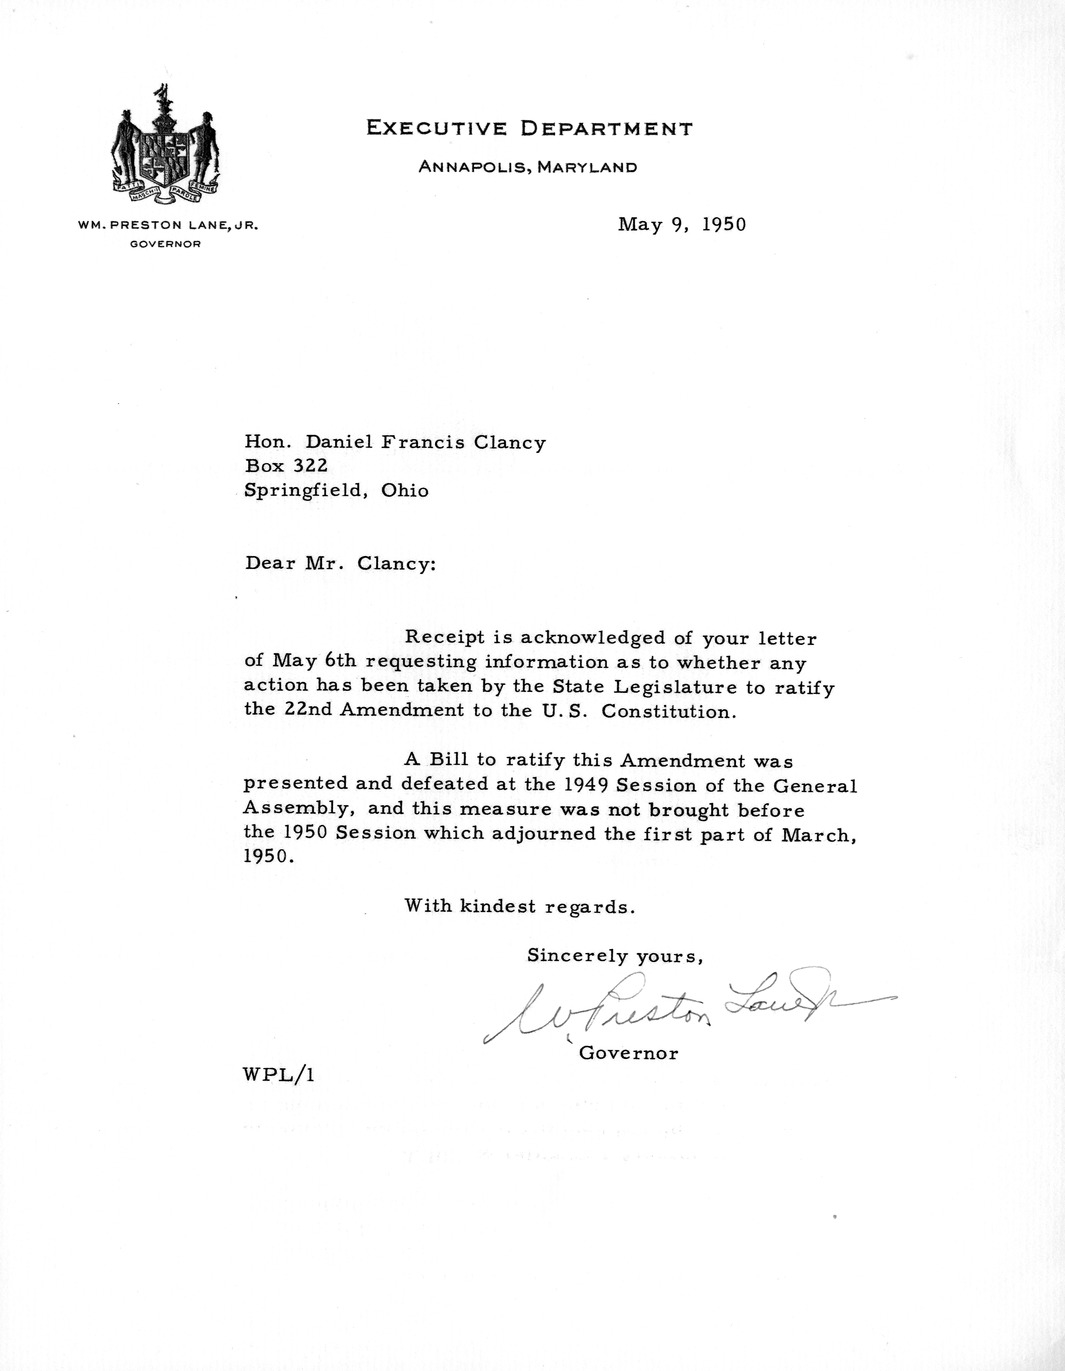 Letter from Governor William Preston Lane, Jr. to Daniel F. Clancy